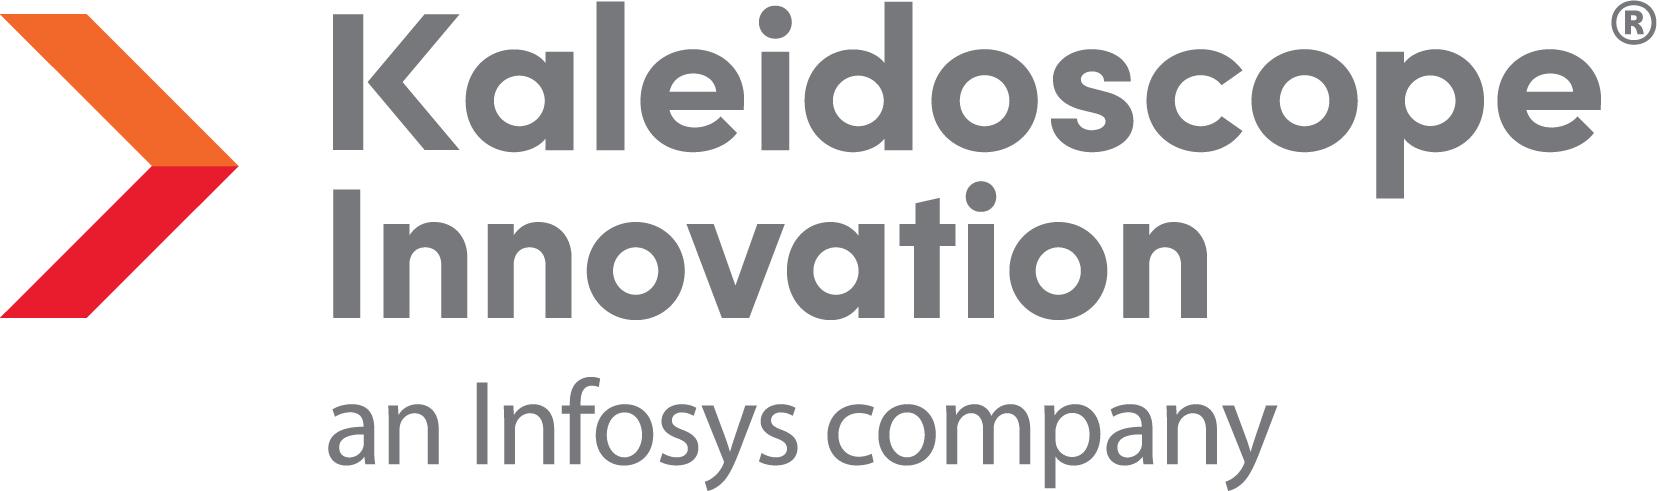 Kaleidoscope Innovation Company Logo